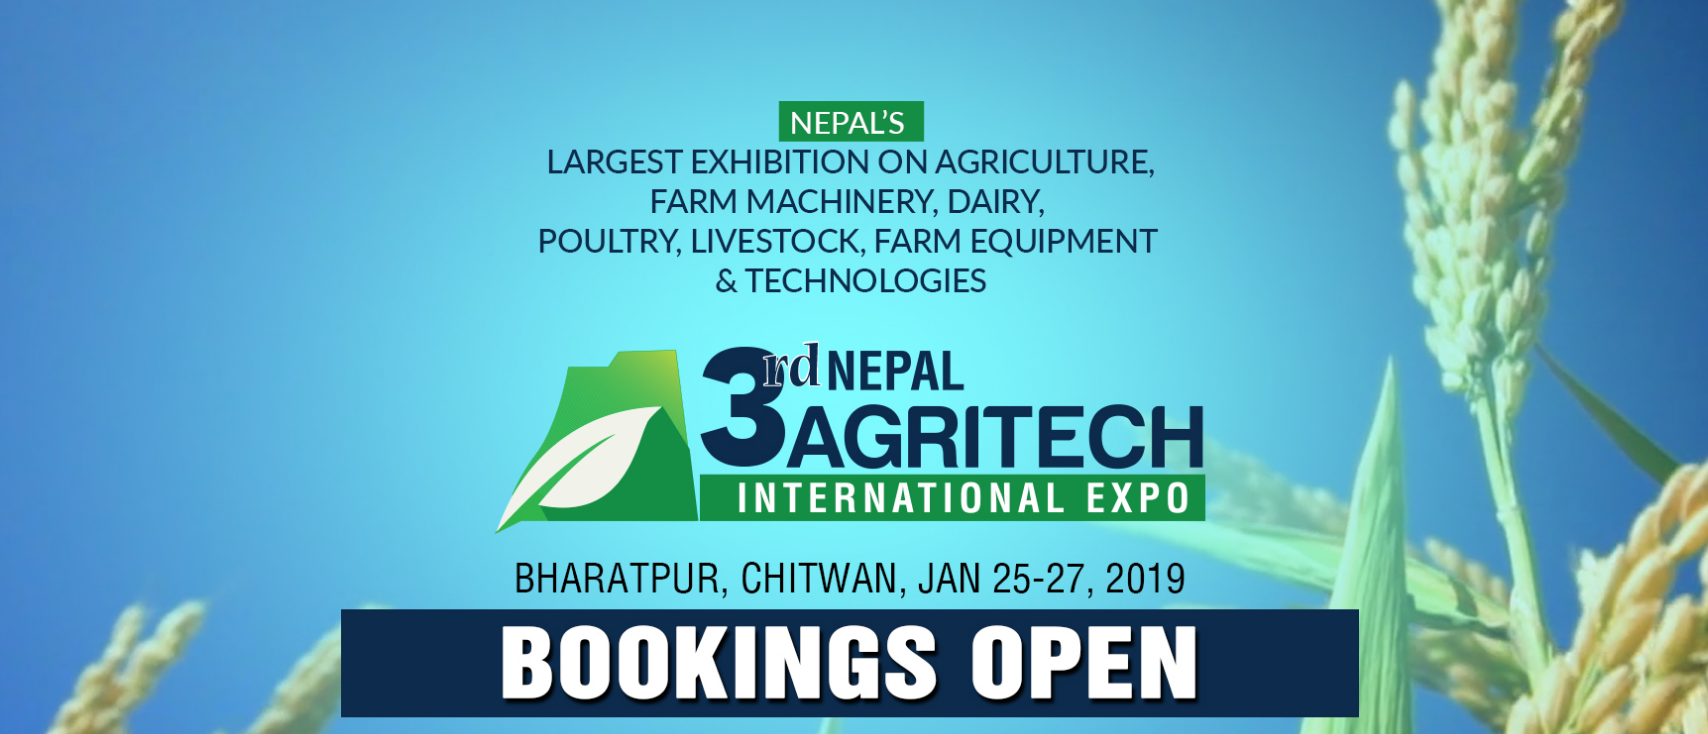 Nepal Agritech International Expo 2019